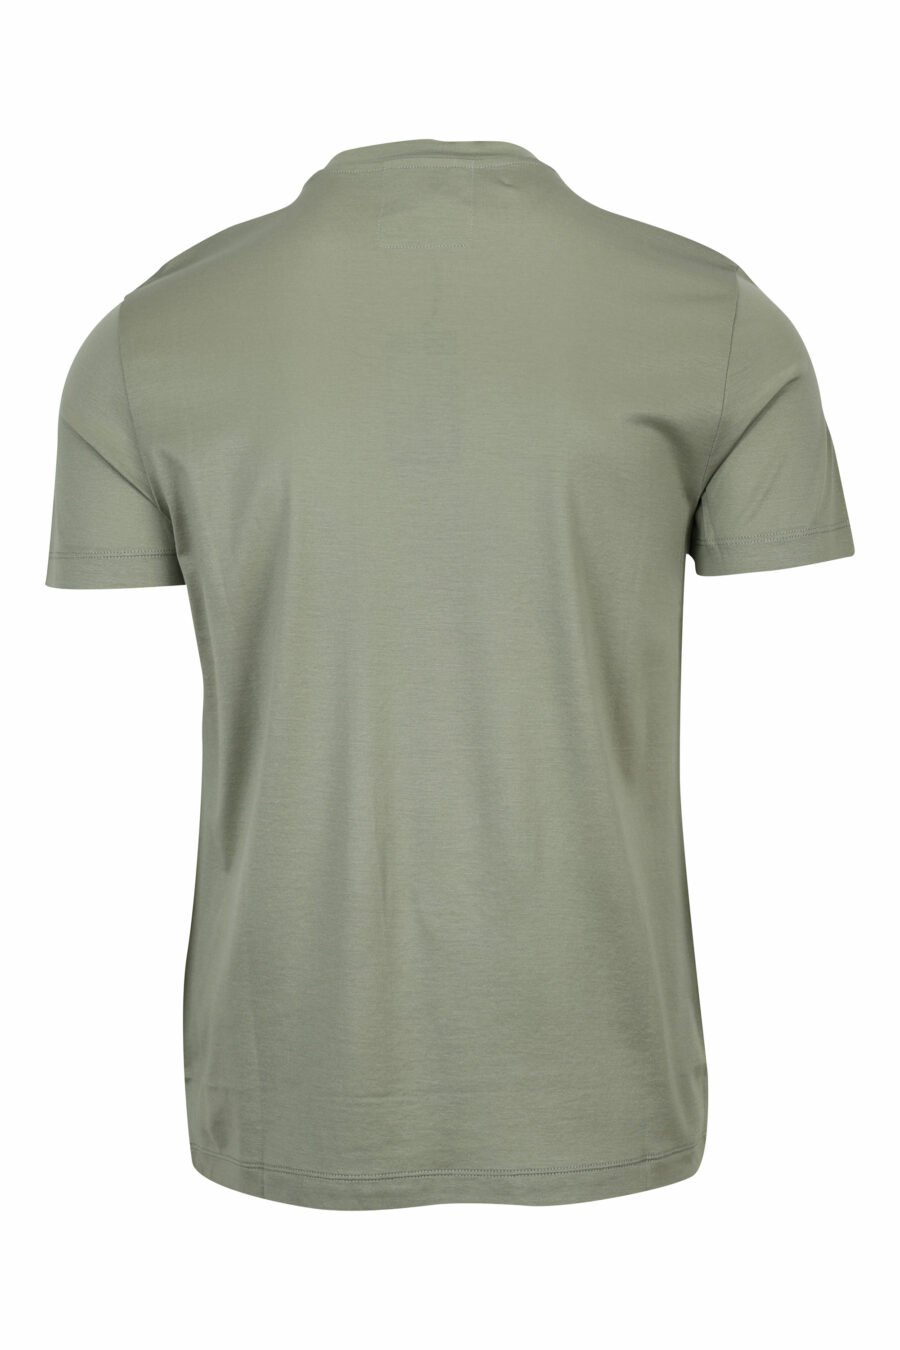 Camiseta verde oliva con minilogo blanco - 8057767092771 1